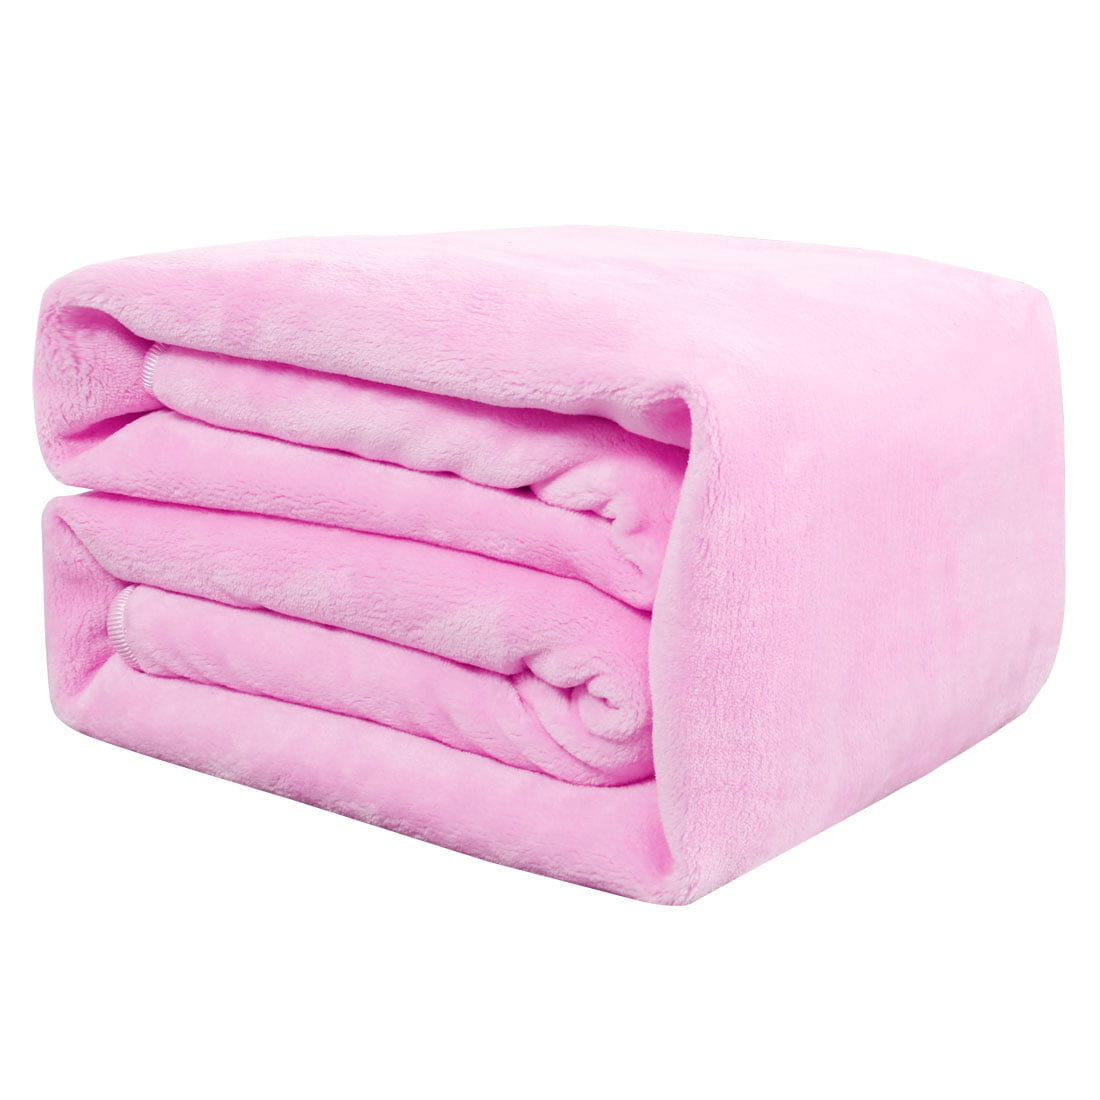 Home Plush Super Soft Warm Flannel Blanket Throw Pink 47 x 78 Inch ...